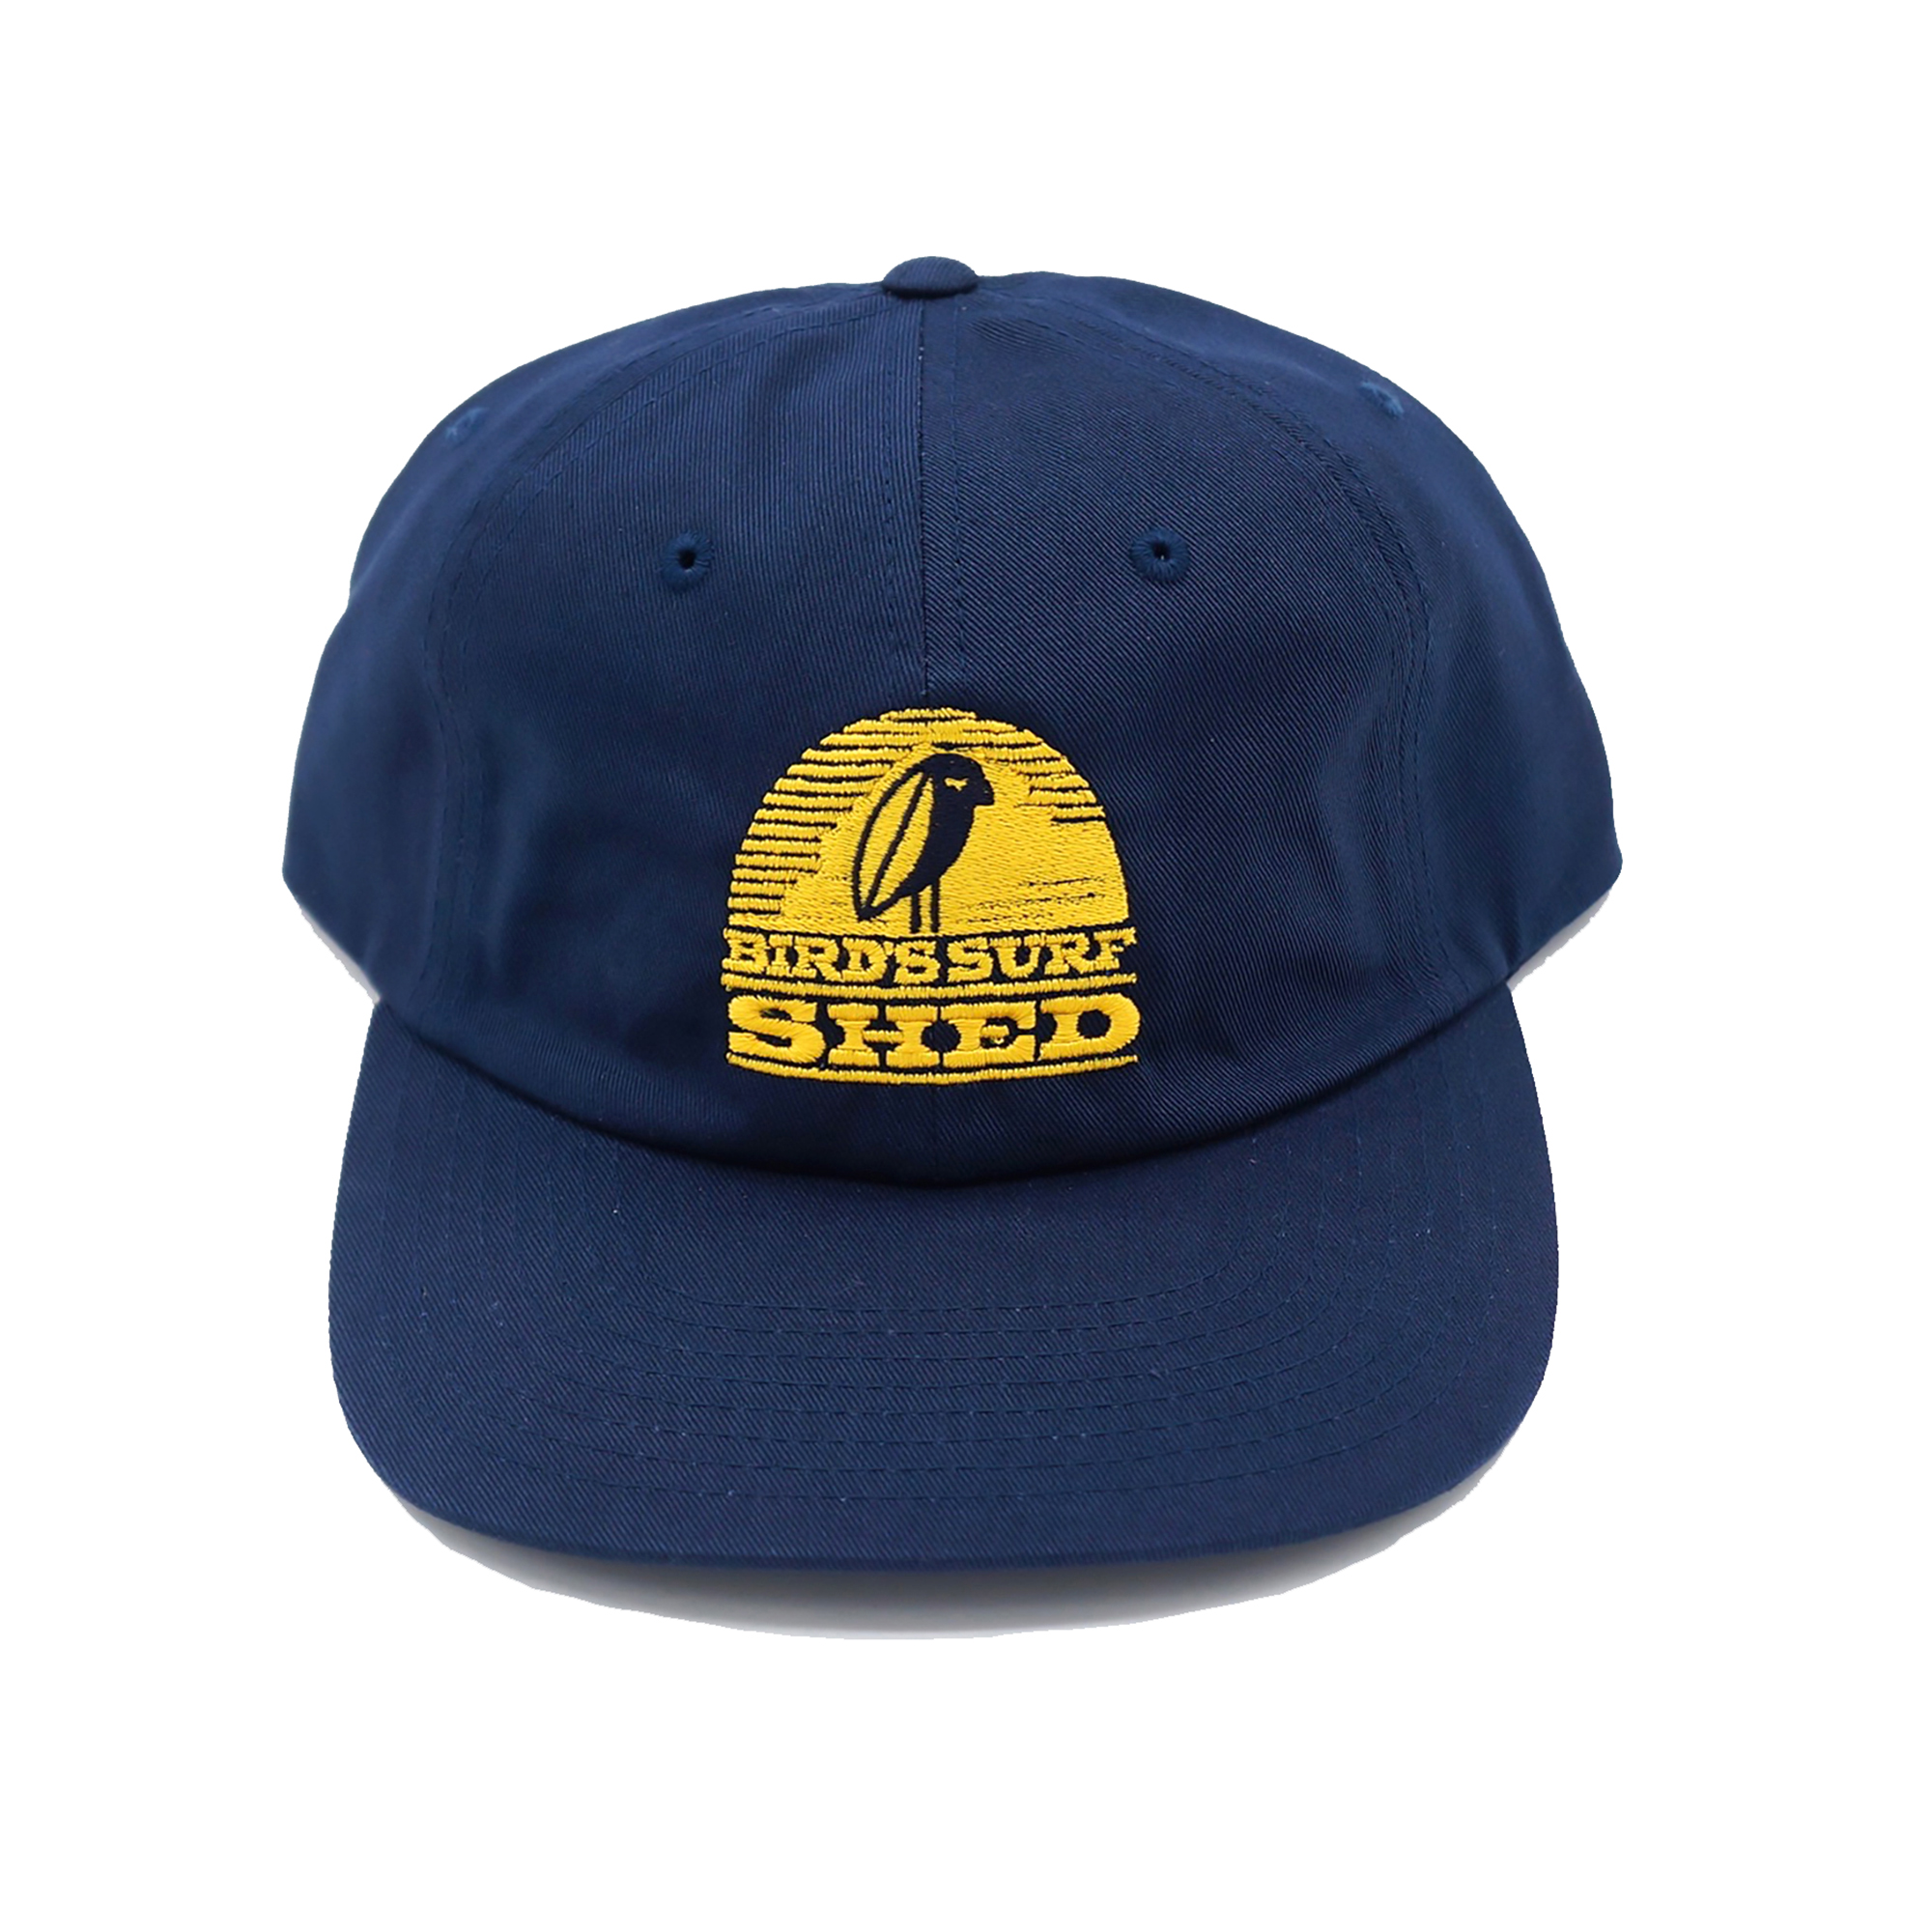 oONESIR Kids Logo Reddy Kilowatt Baseball Cap Adjustable Strapback Dad Hat Mesh for Boys Girls